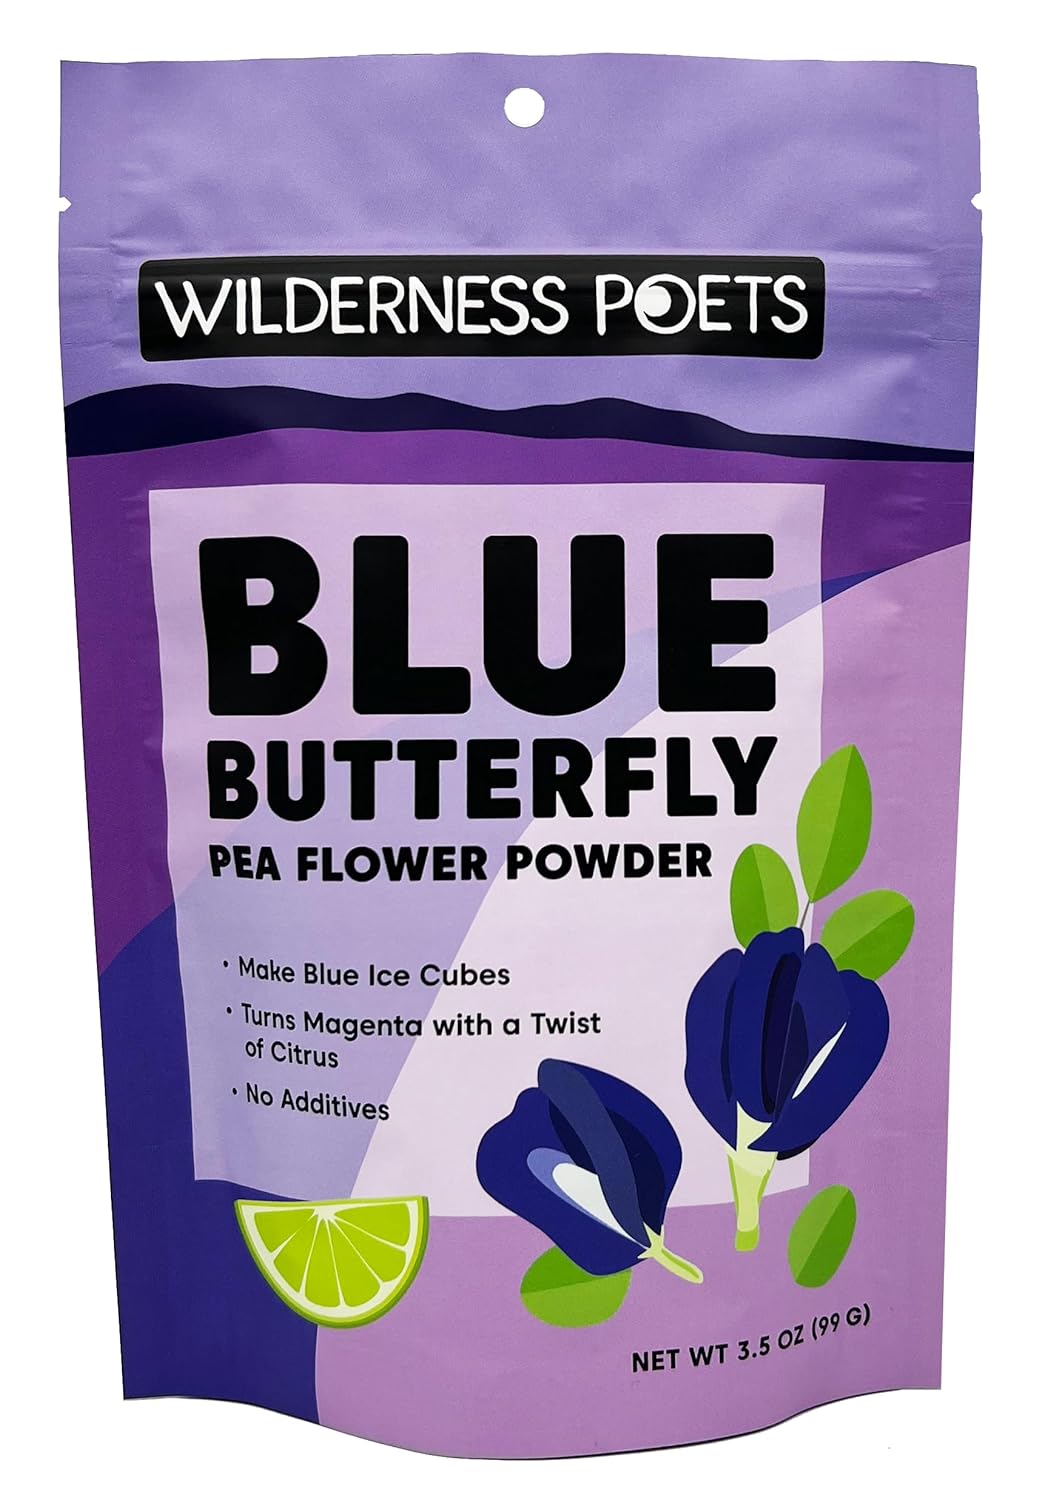 Wilderness Poets Blue Butterfly Pea Flower Powder - Blue Matcha Tea 3.5oz (99g)